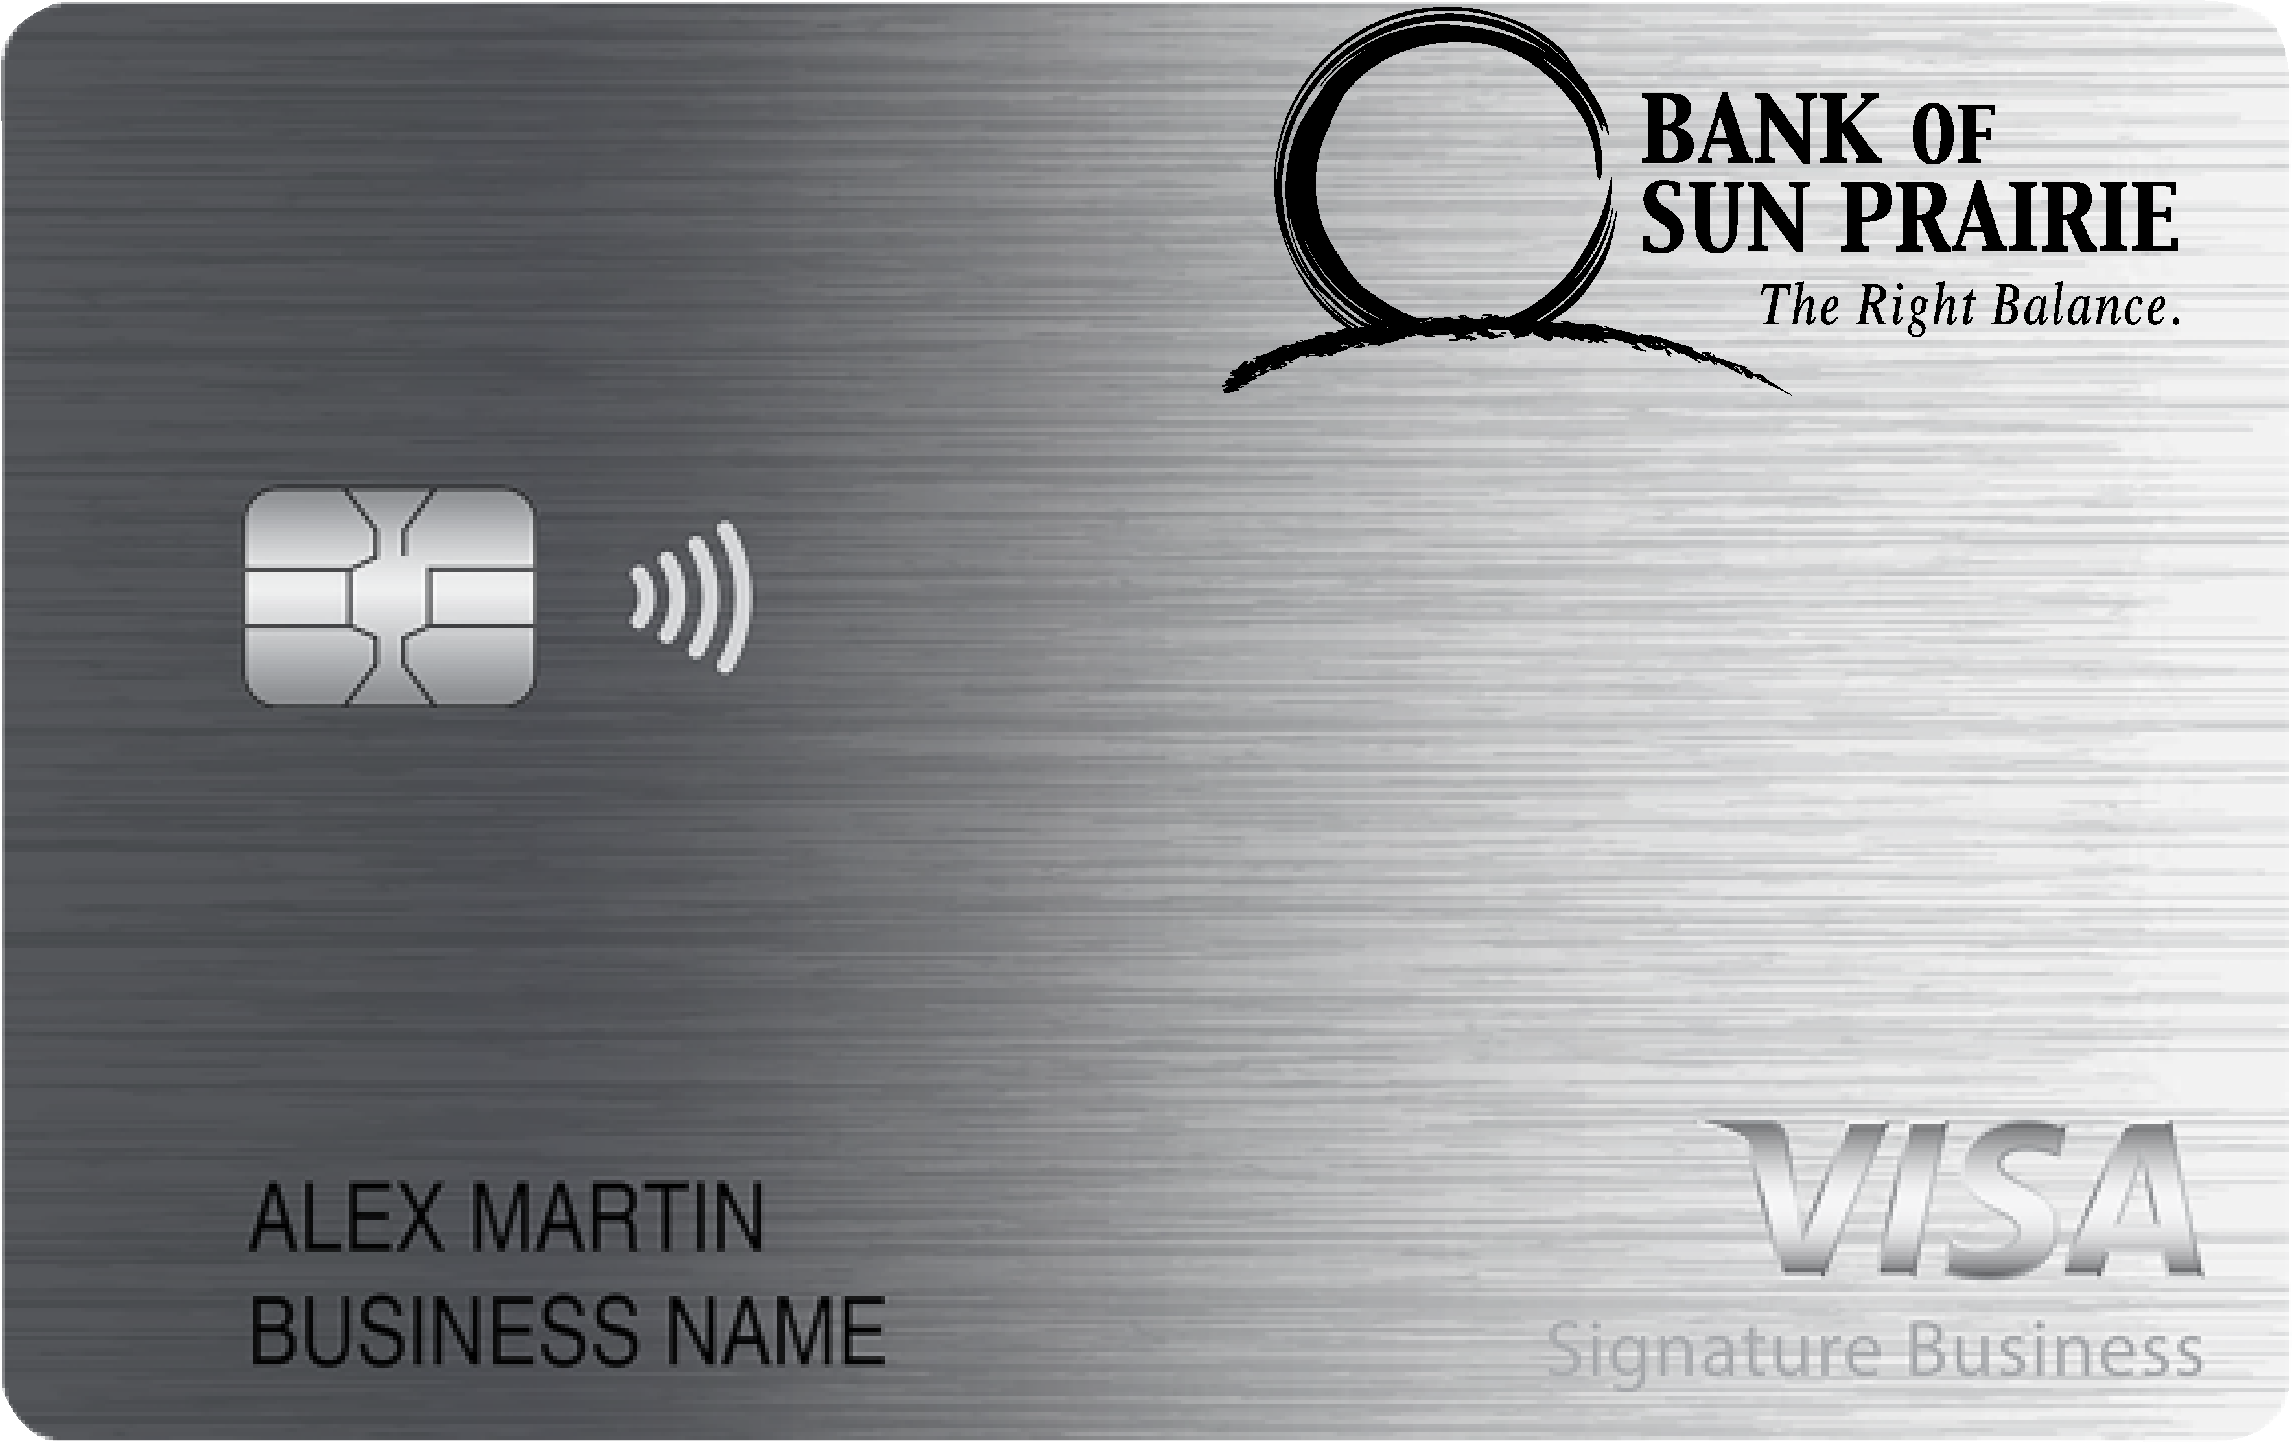 Bank of Sun Prairie Smart Business Rewards Card